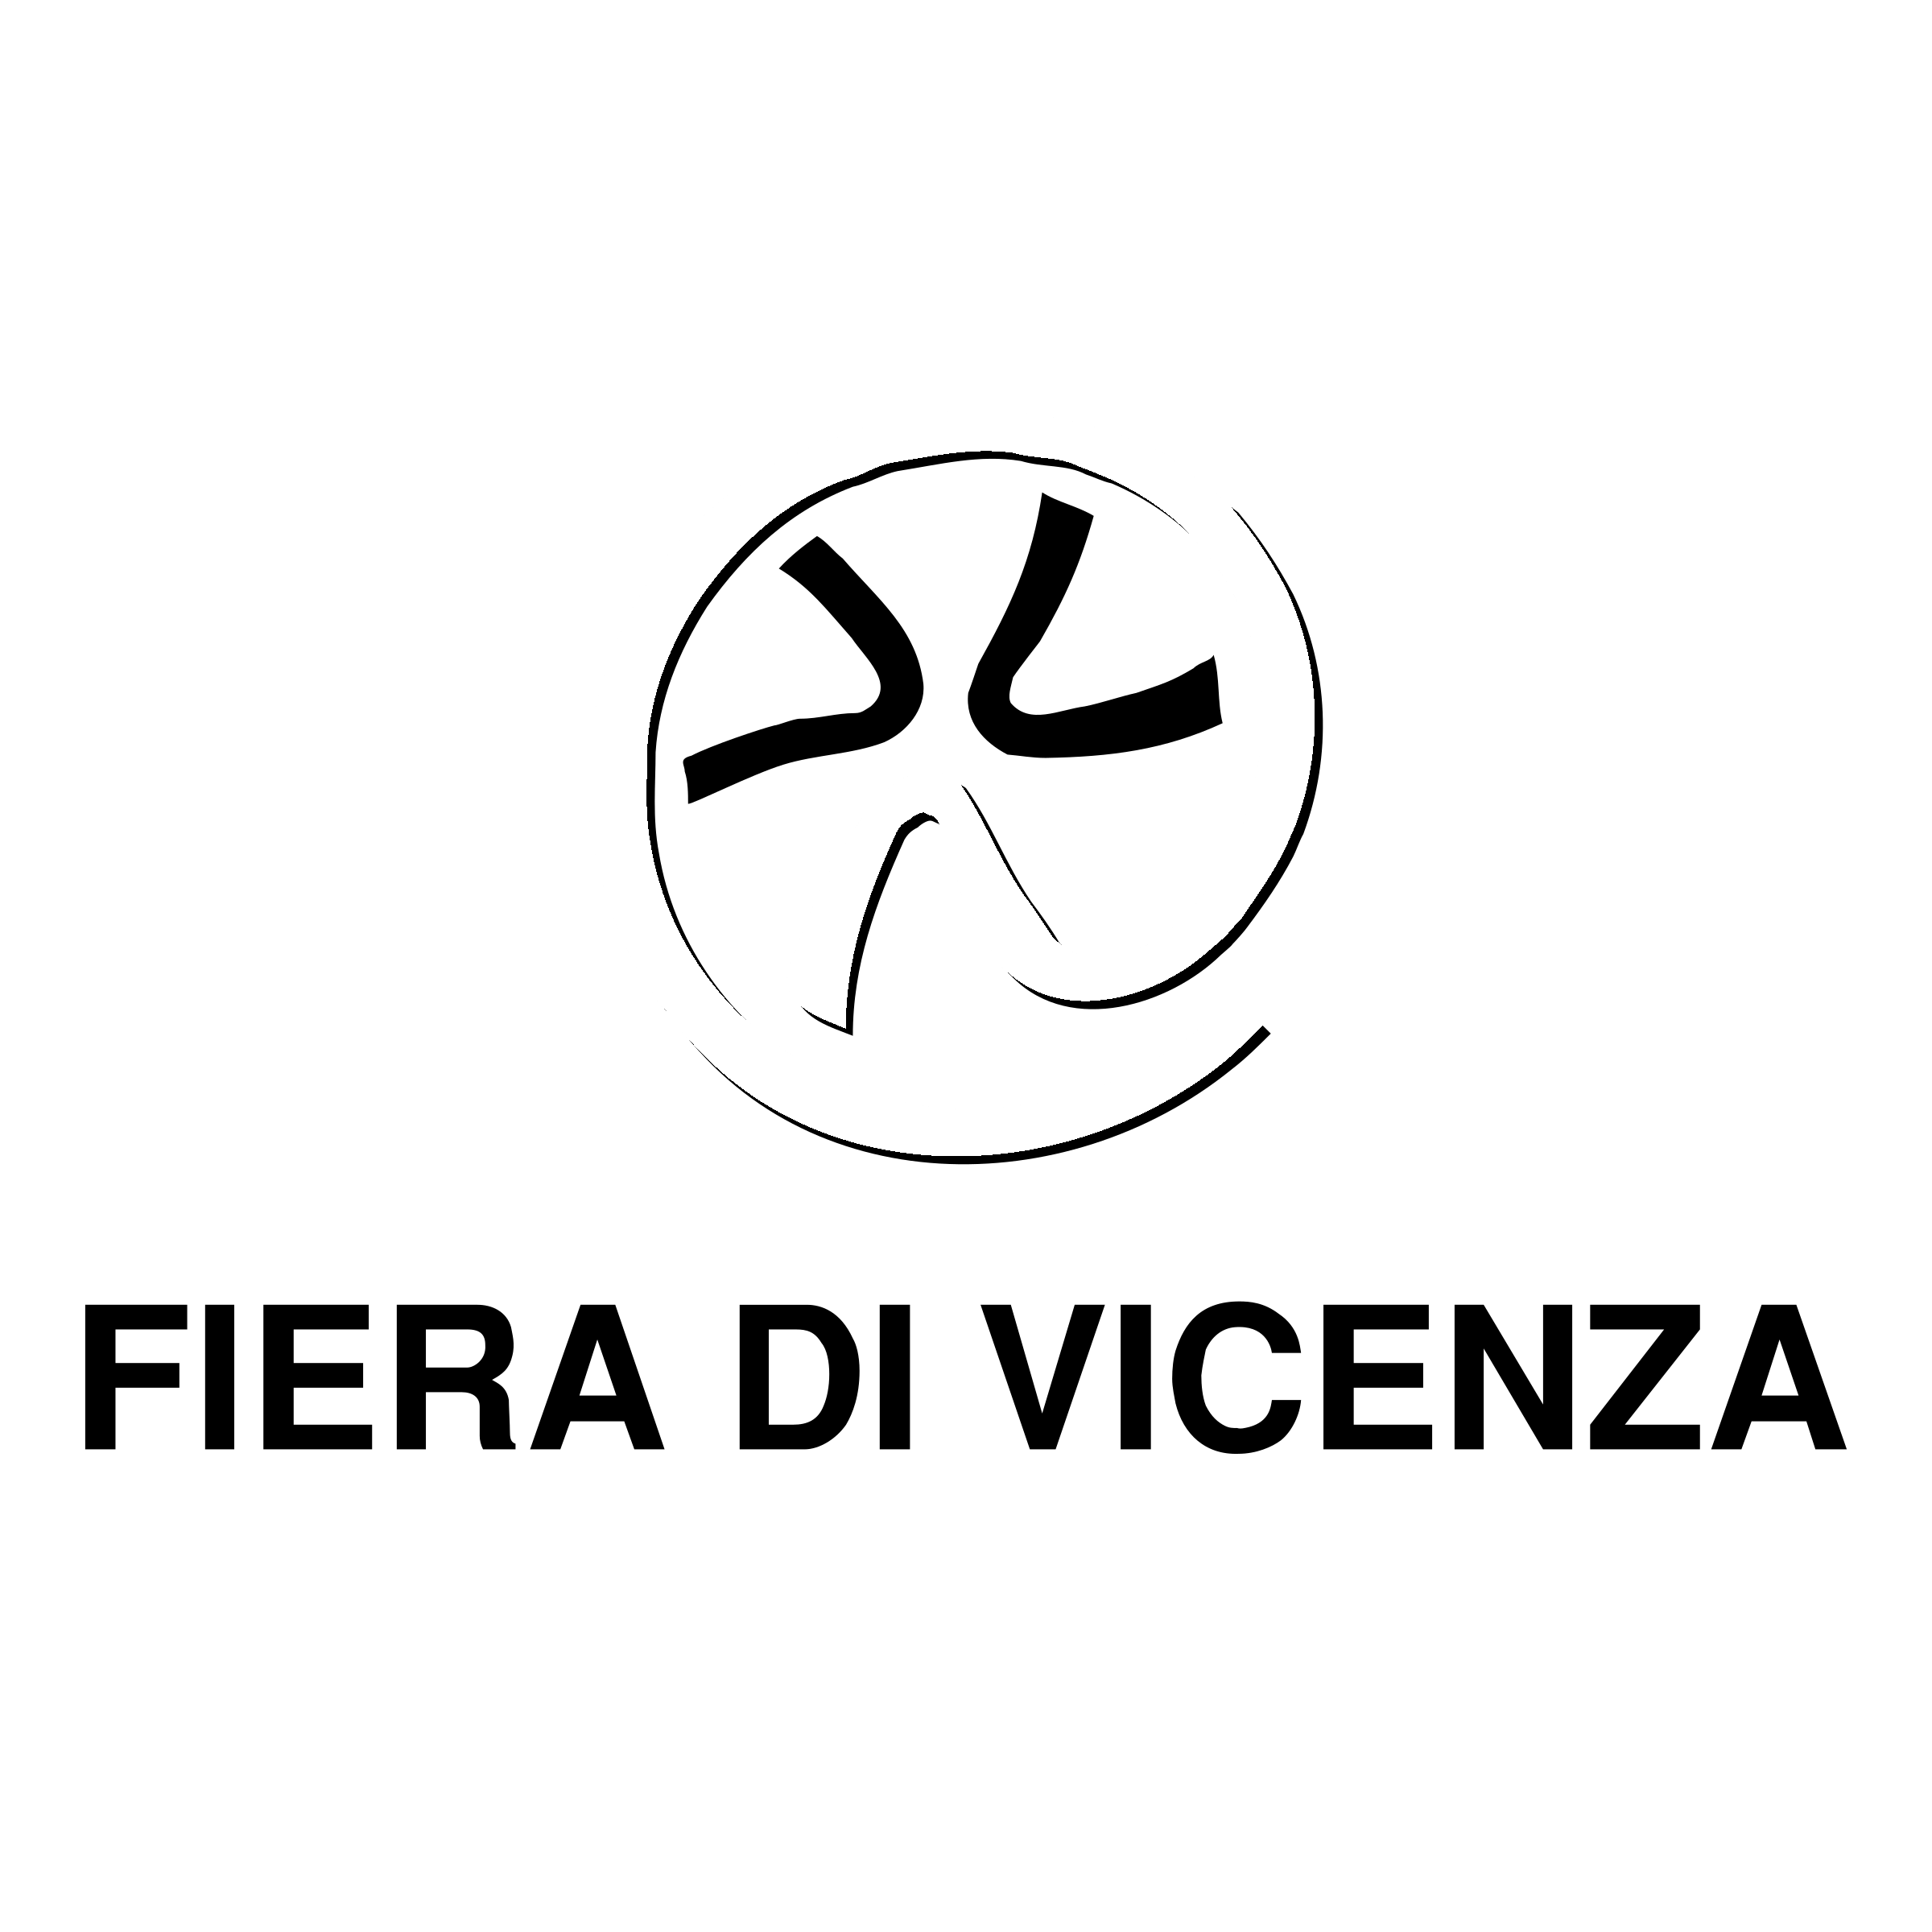 Vicenza Logo - Fiera Di Vicenza Logo PNG Transparent & SVG Vector